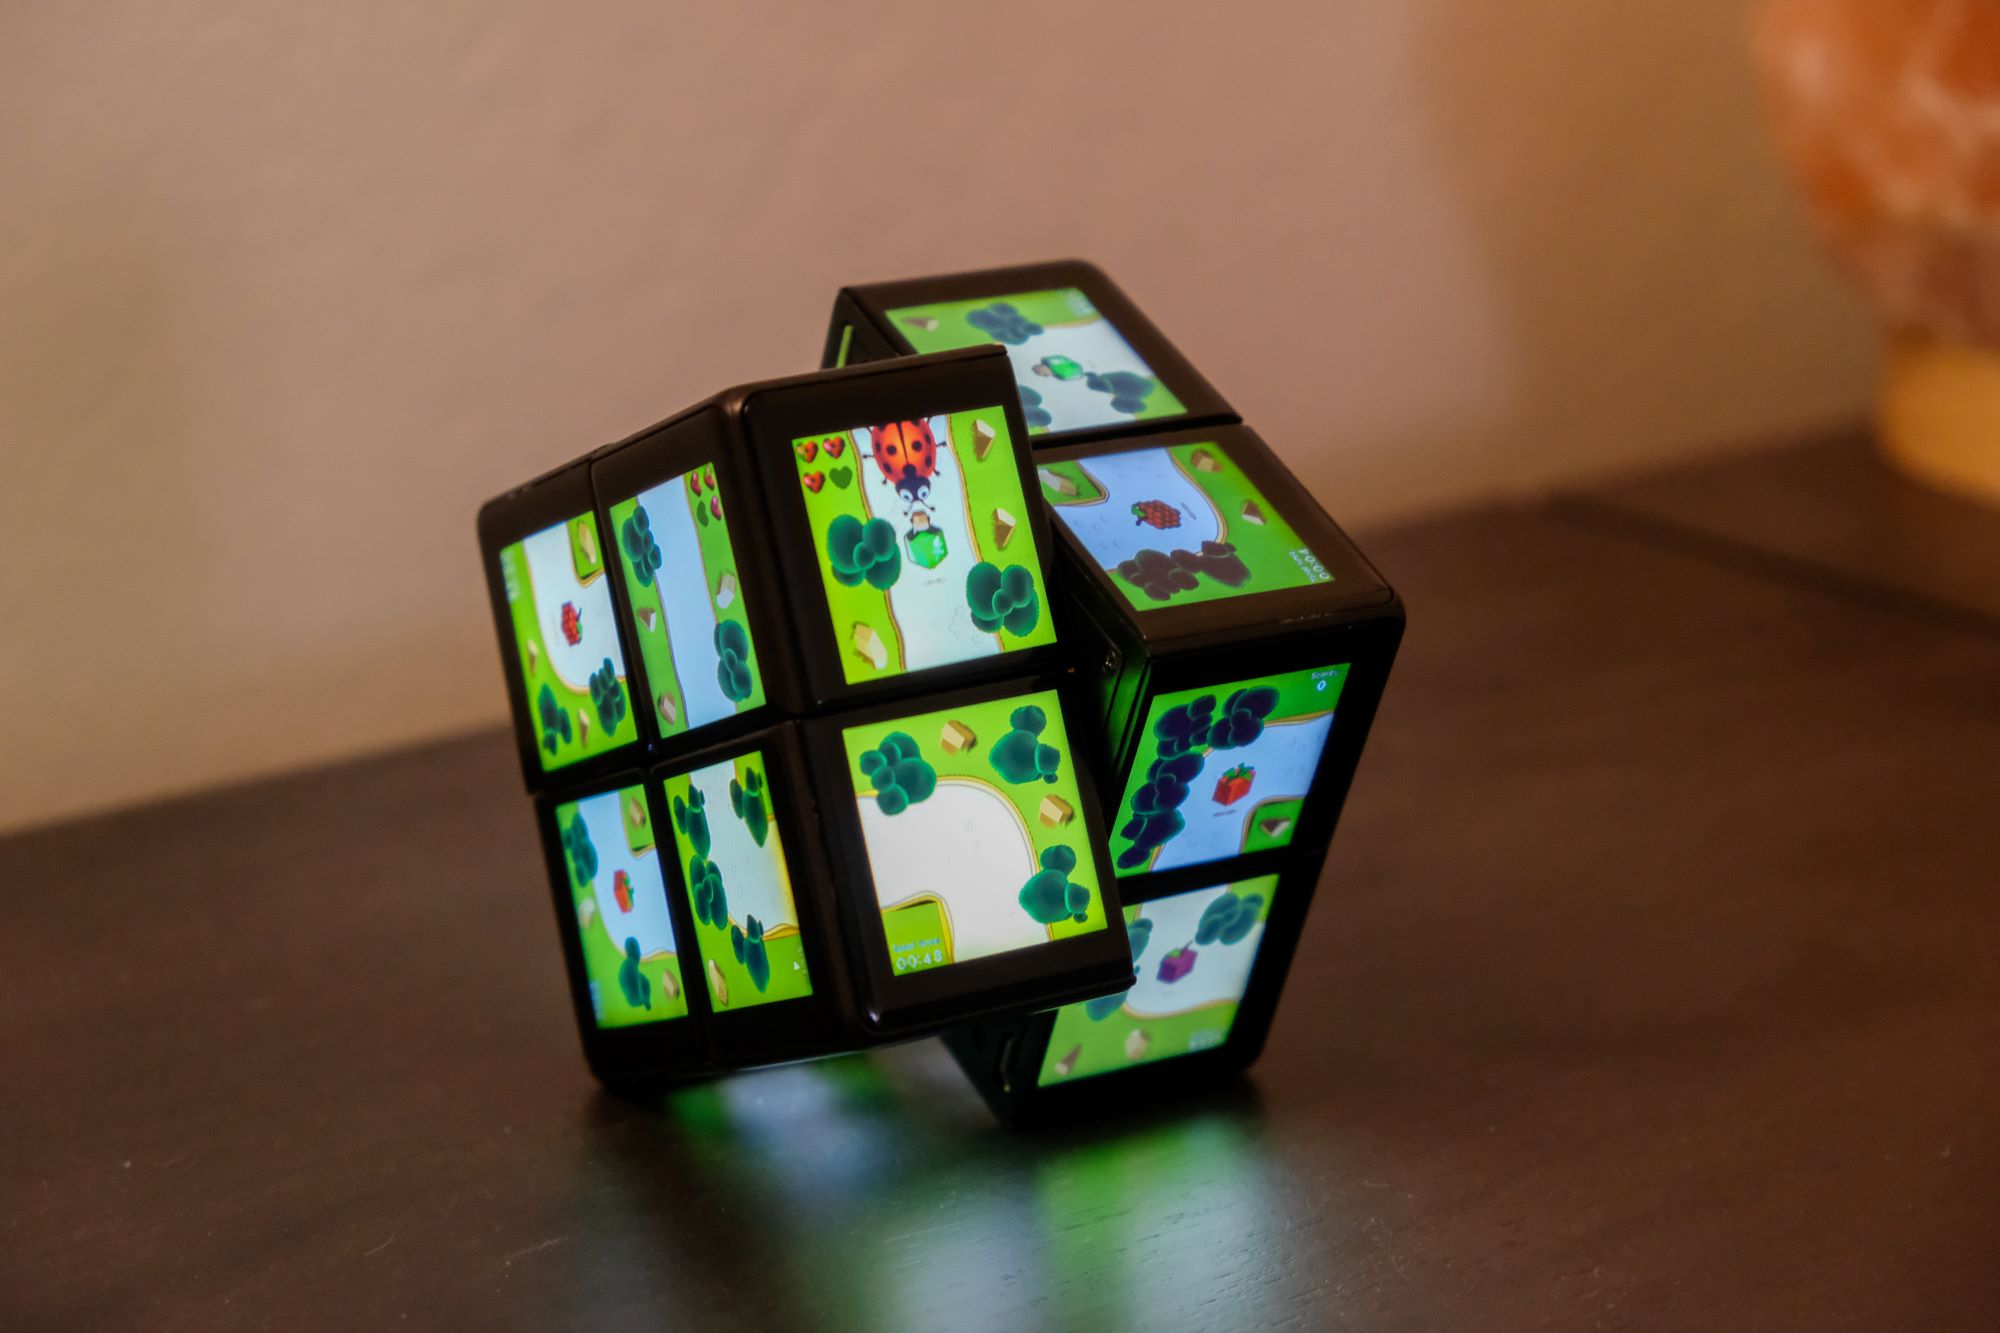 Online Rubik's Cube Simulator: Play Super Rubiks Cube Game Online